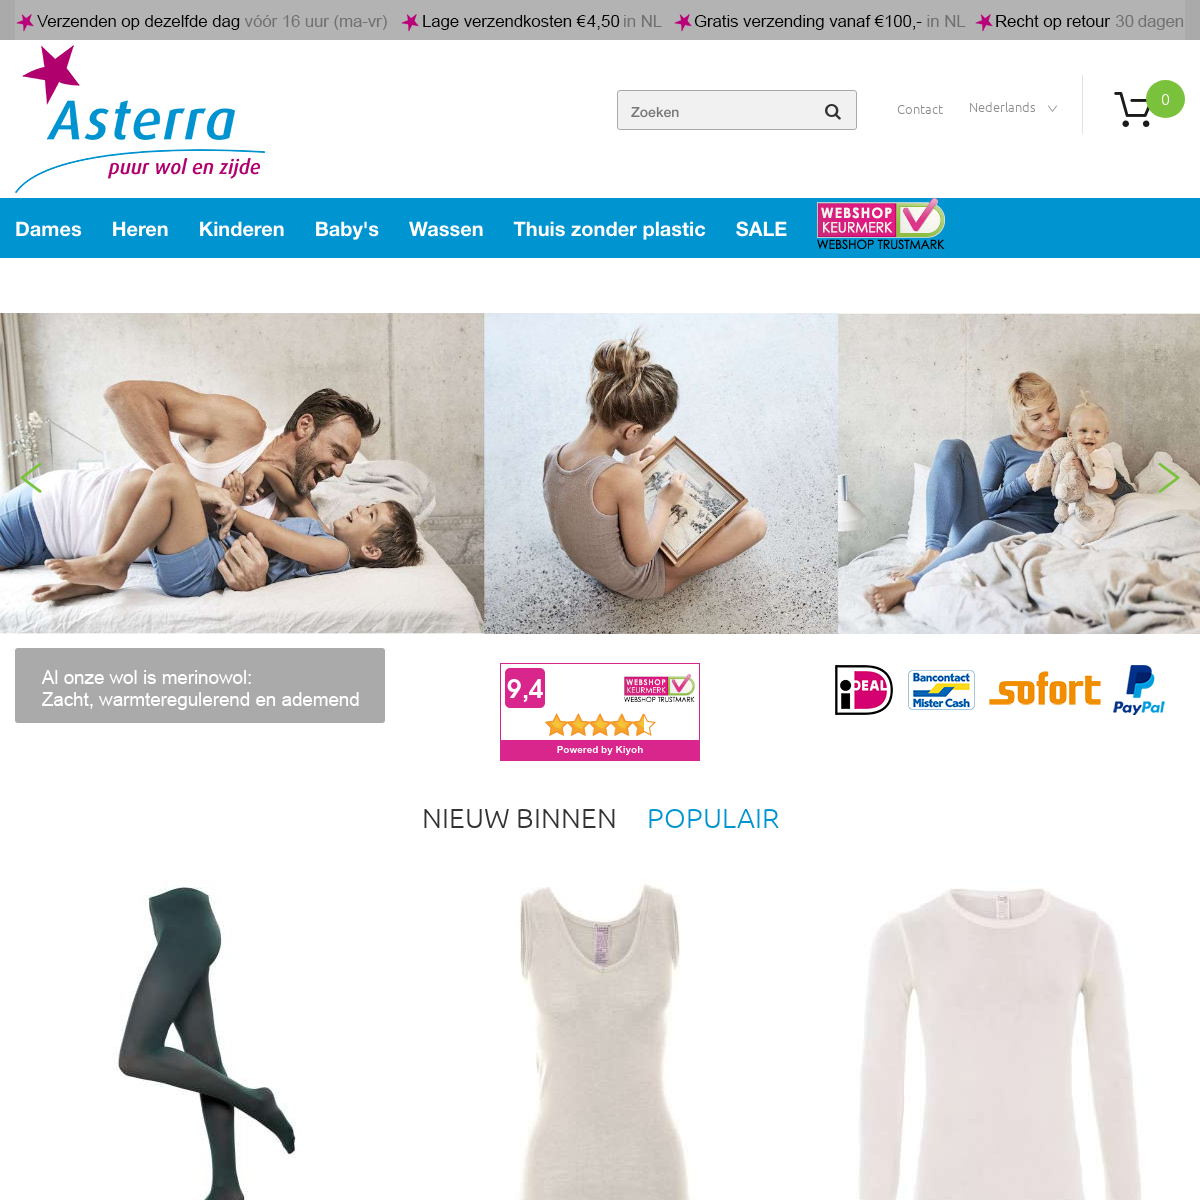 Puur wol en zijde - Asterra homepage